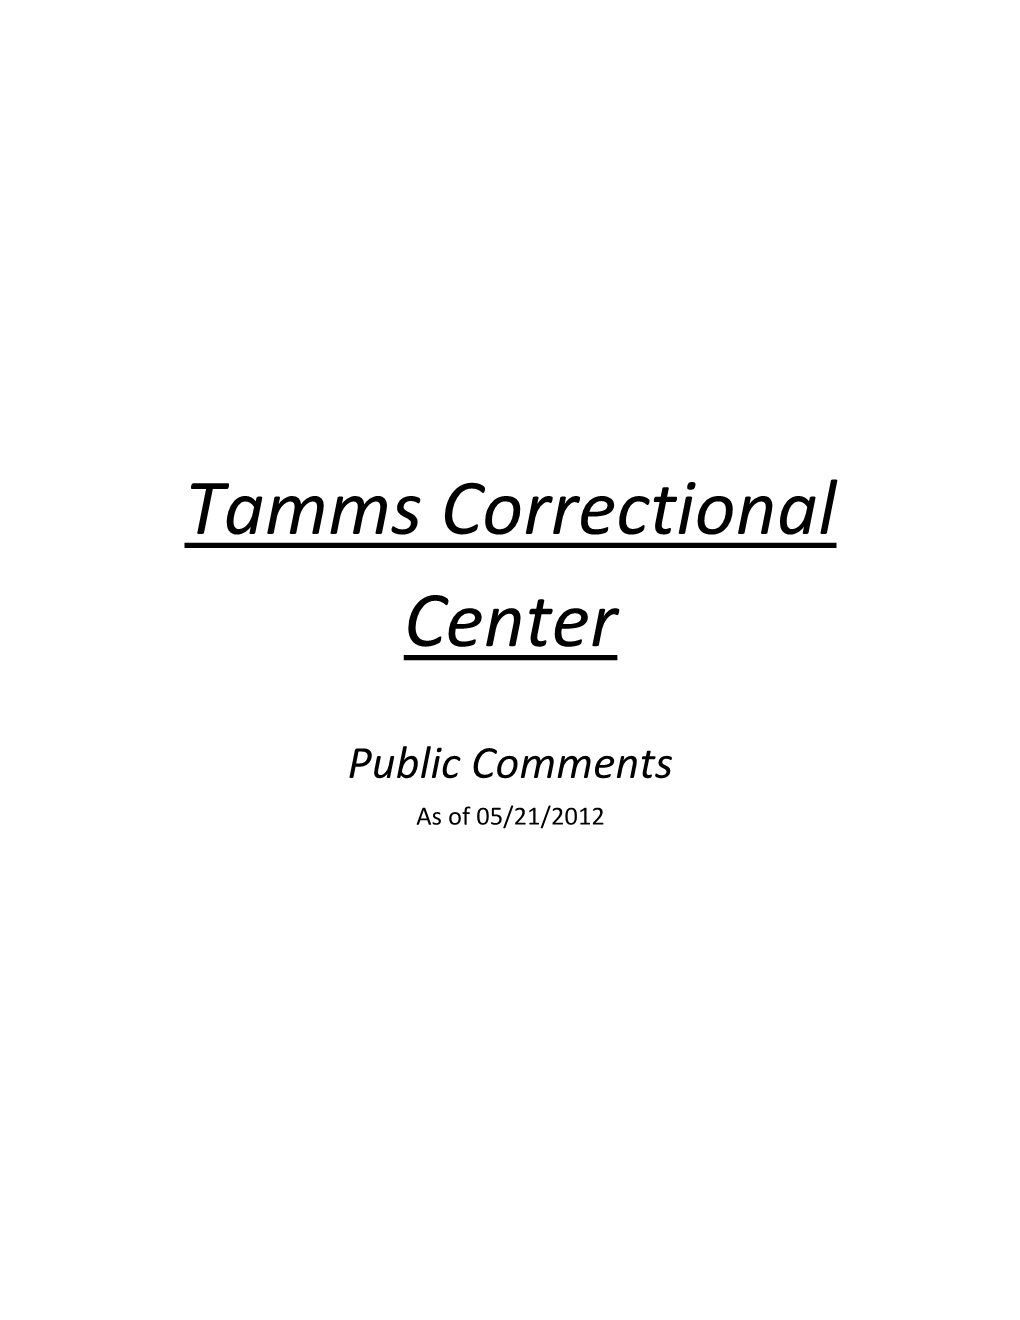 Tamms Correctional Center